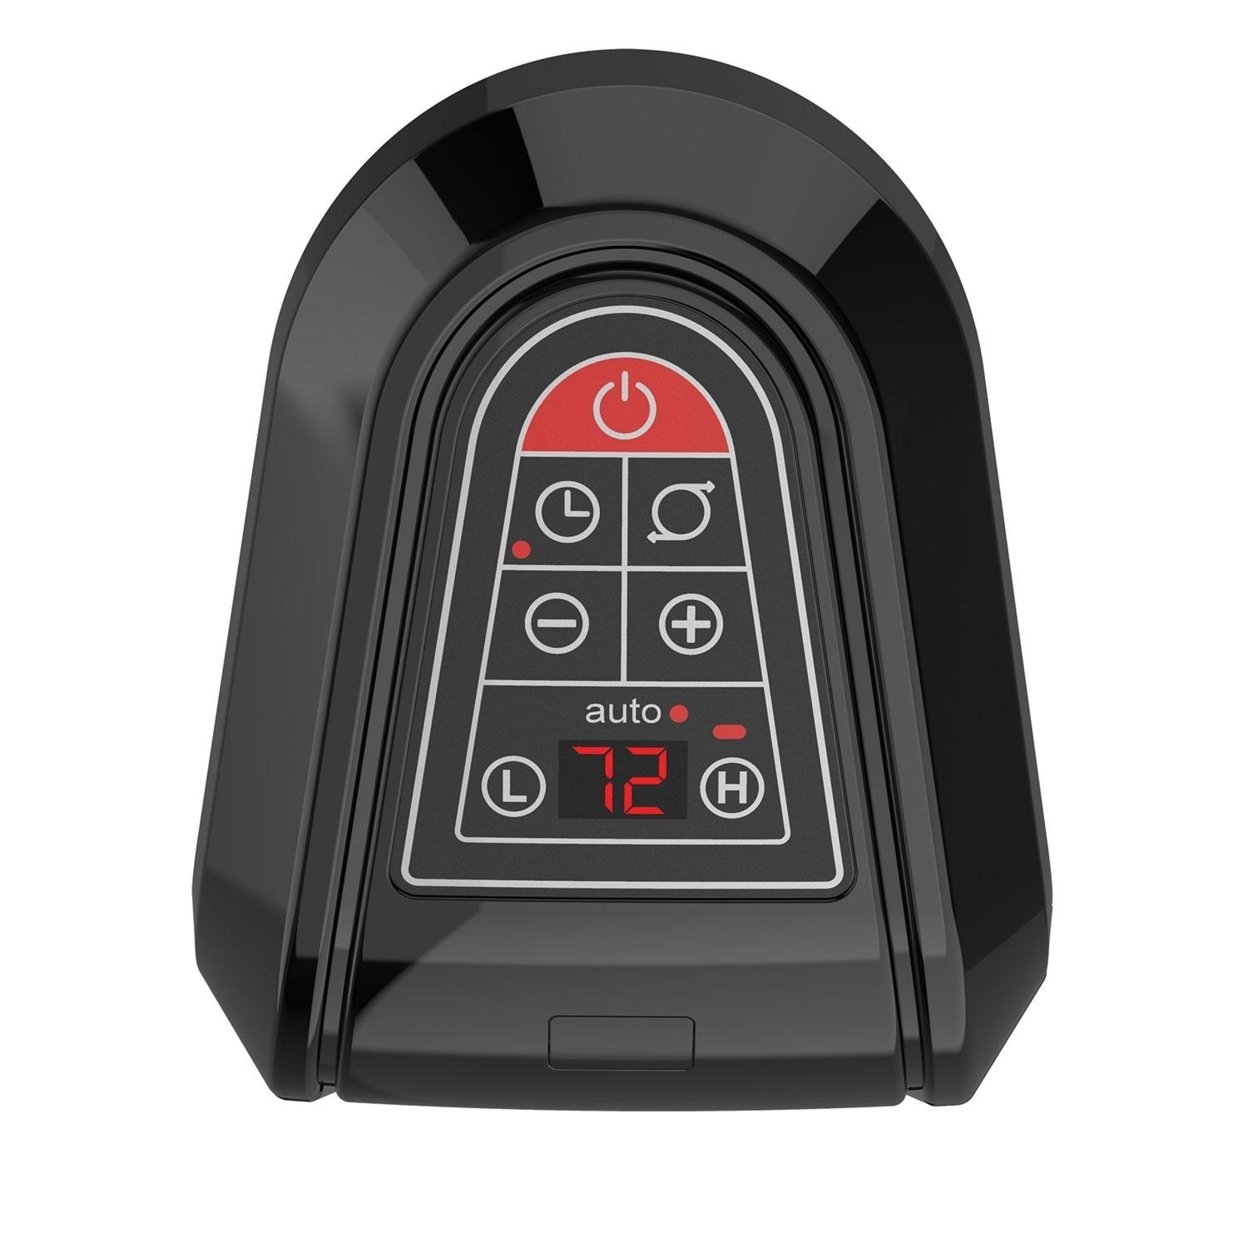 Lasko CT16670 Digital Ceramic Tower Heater With Remote Control